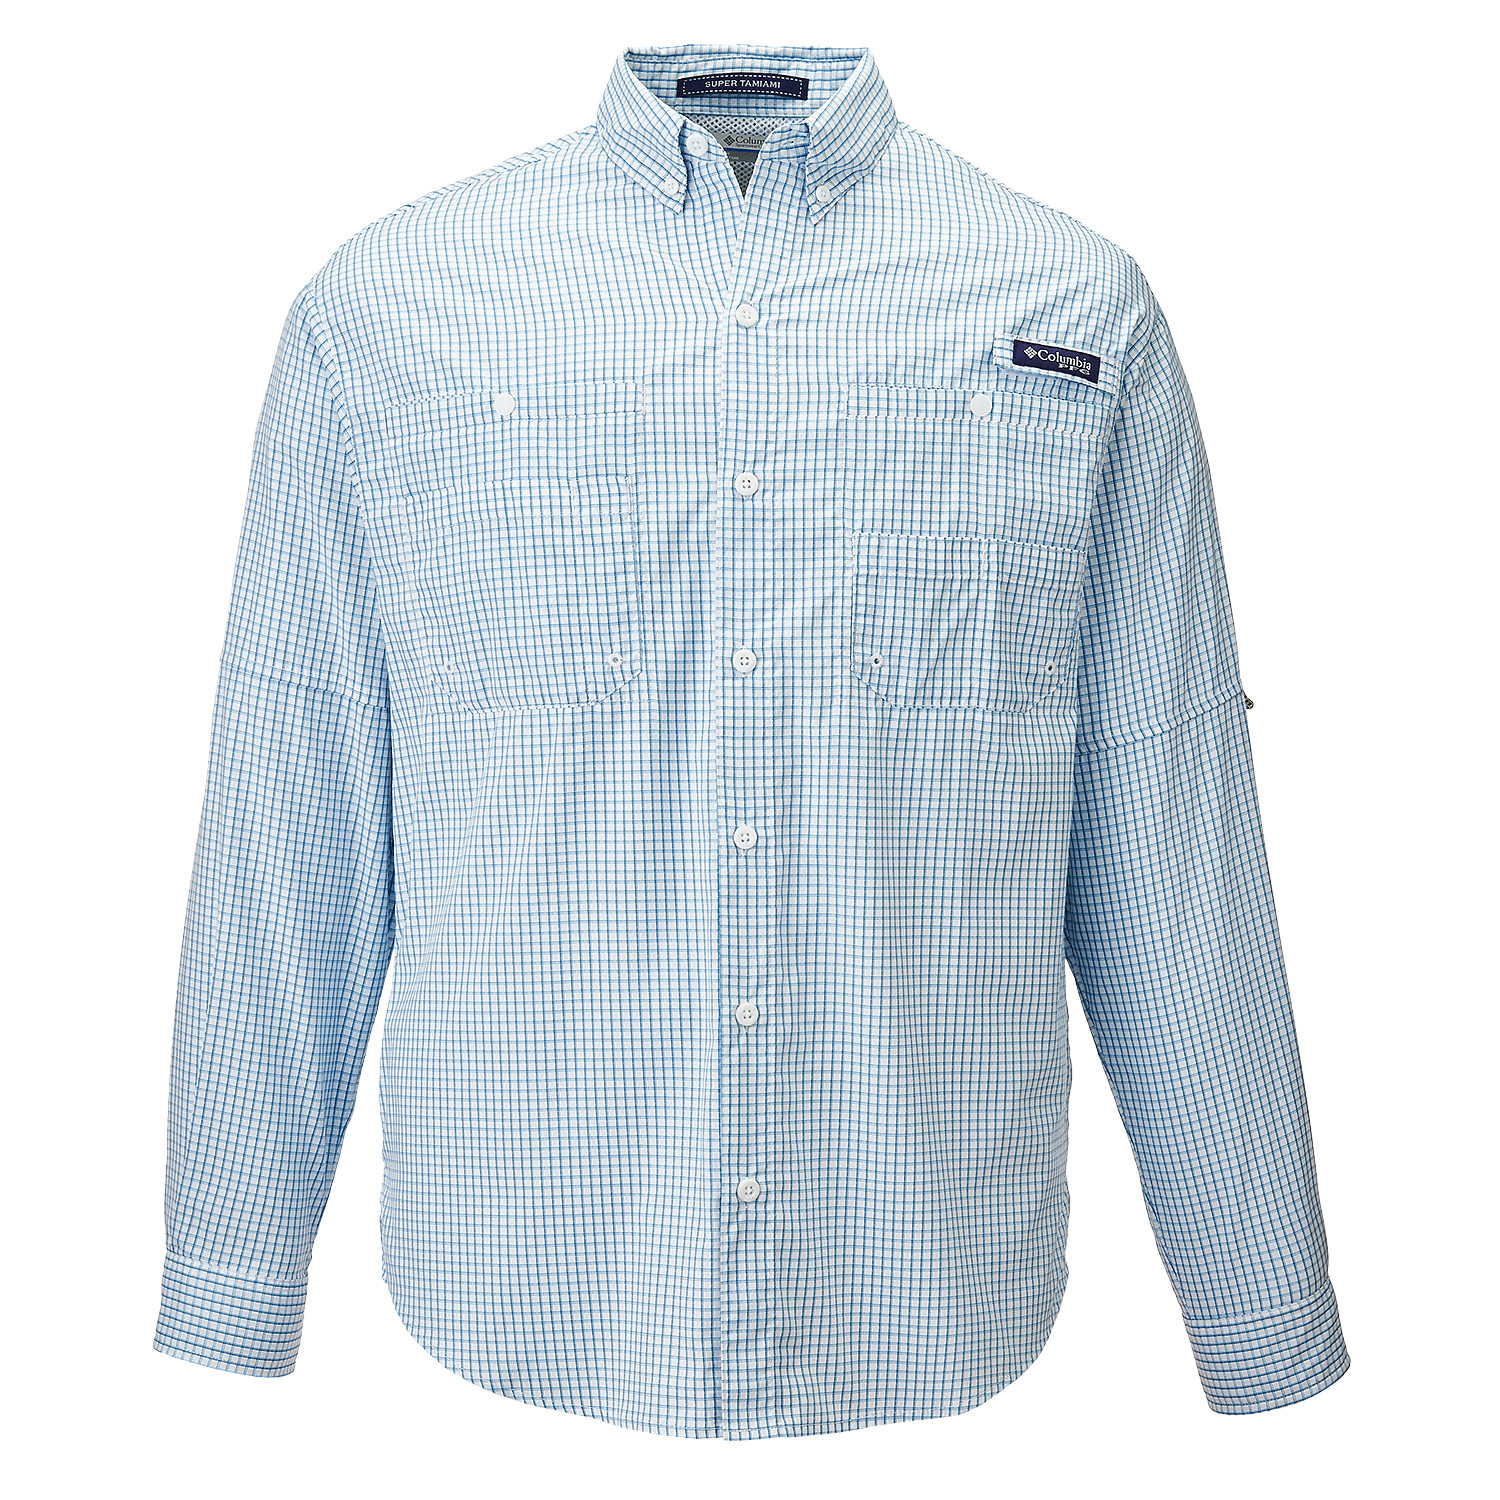 Columbia 143894 - Men's PFG Super Tamiami™ Gingham Long Sleeve Shirt